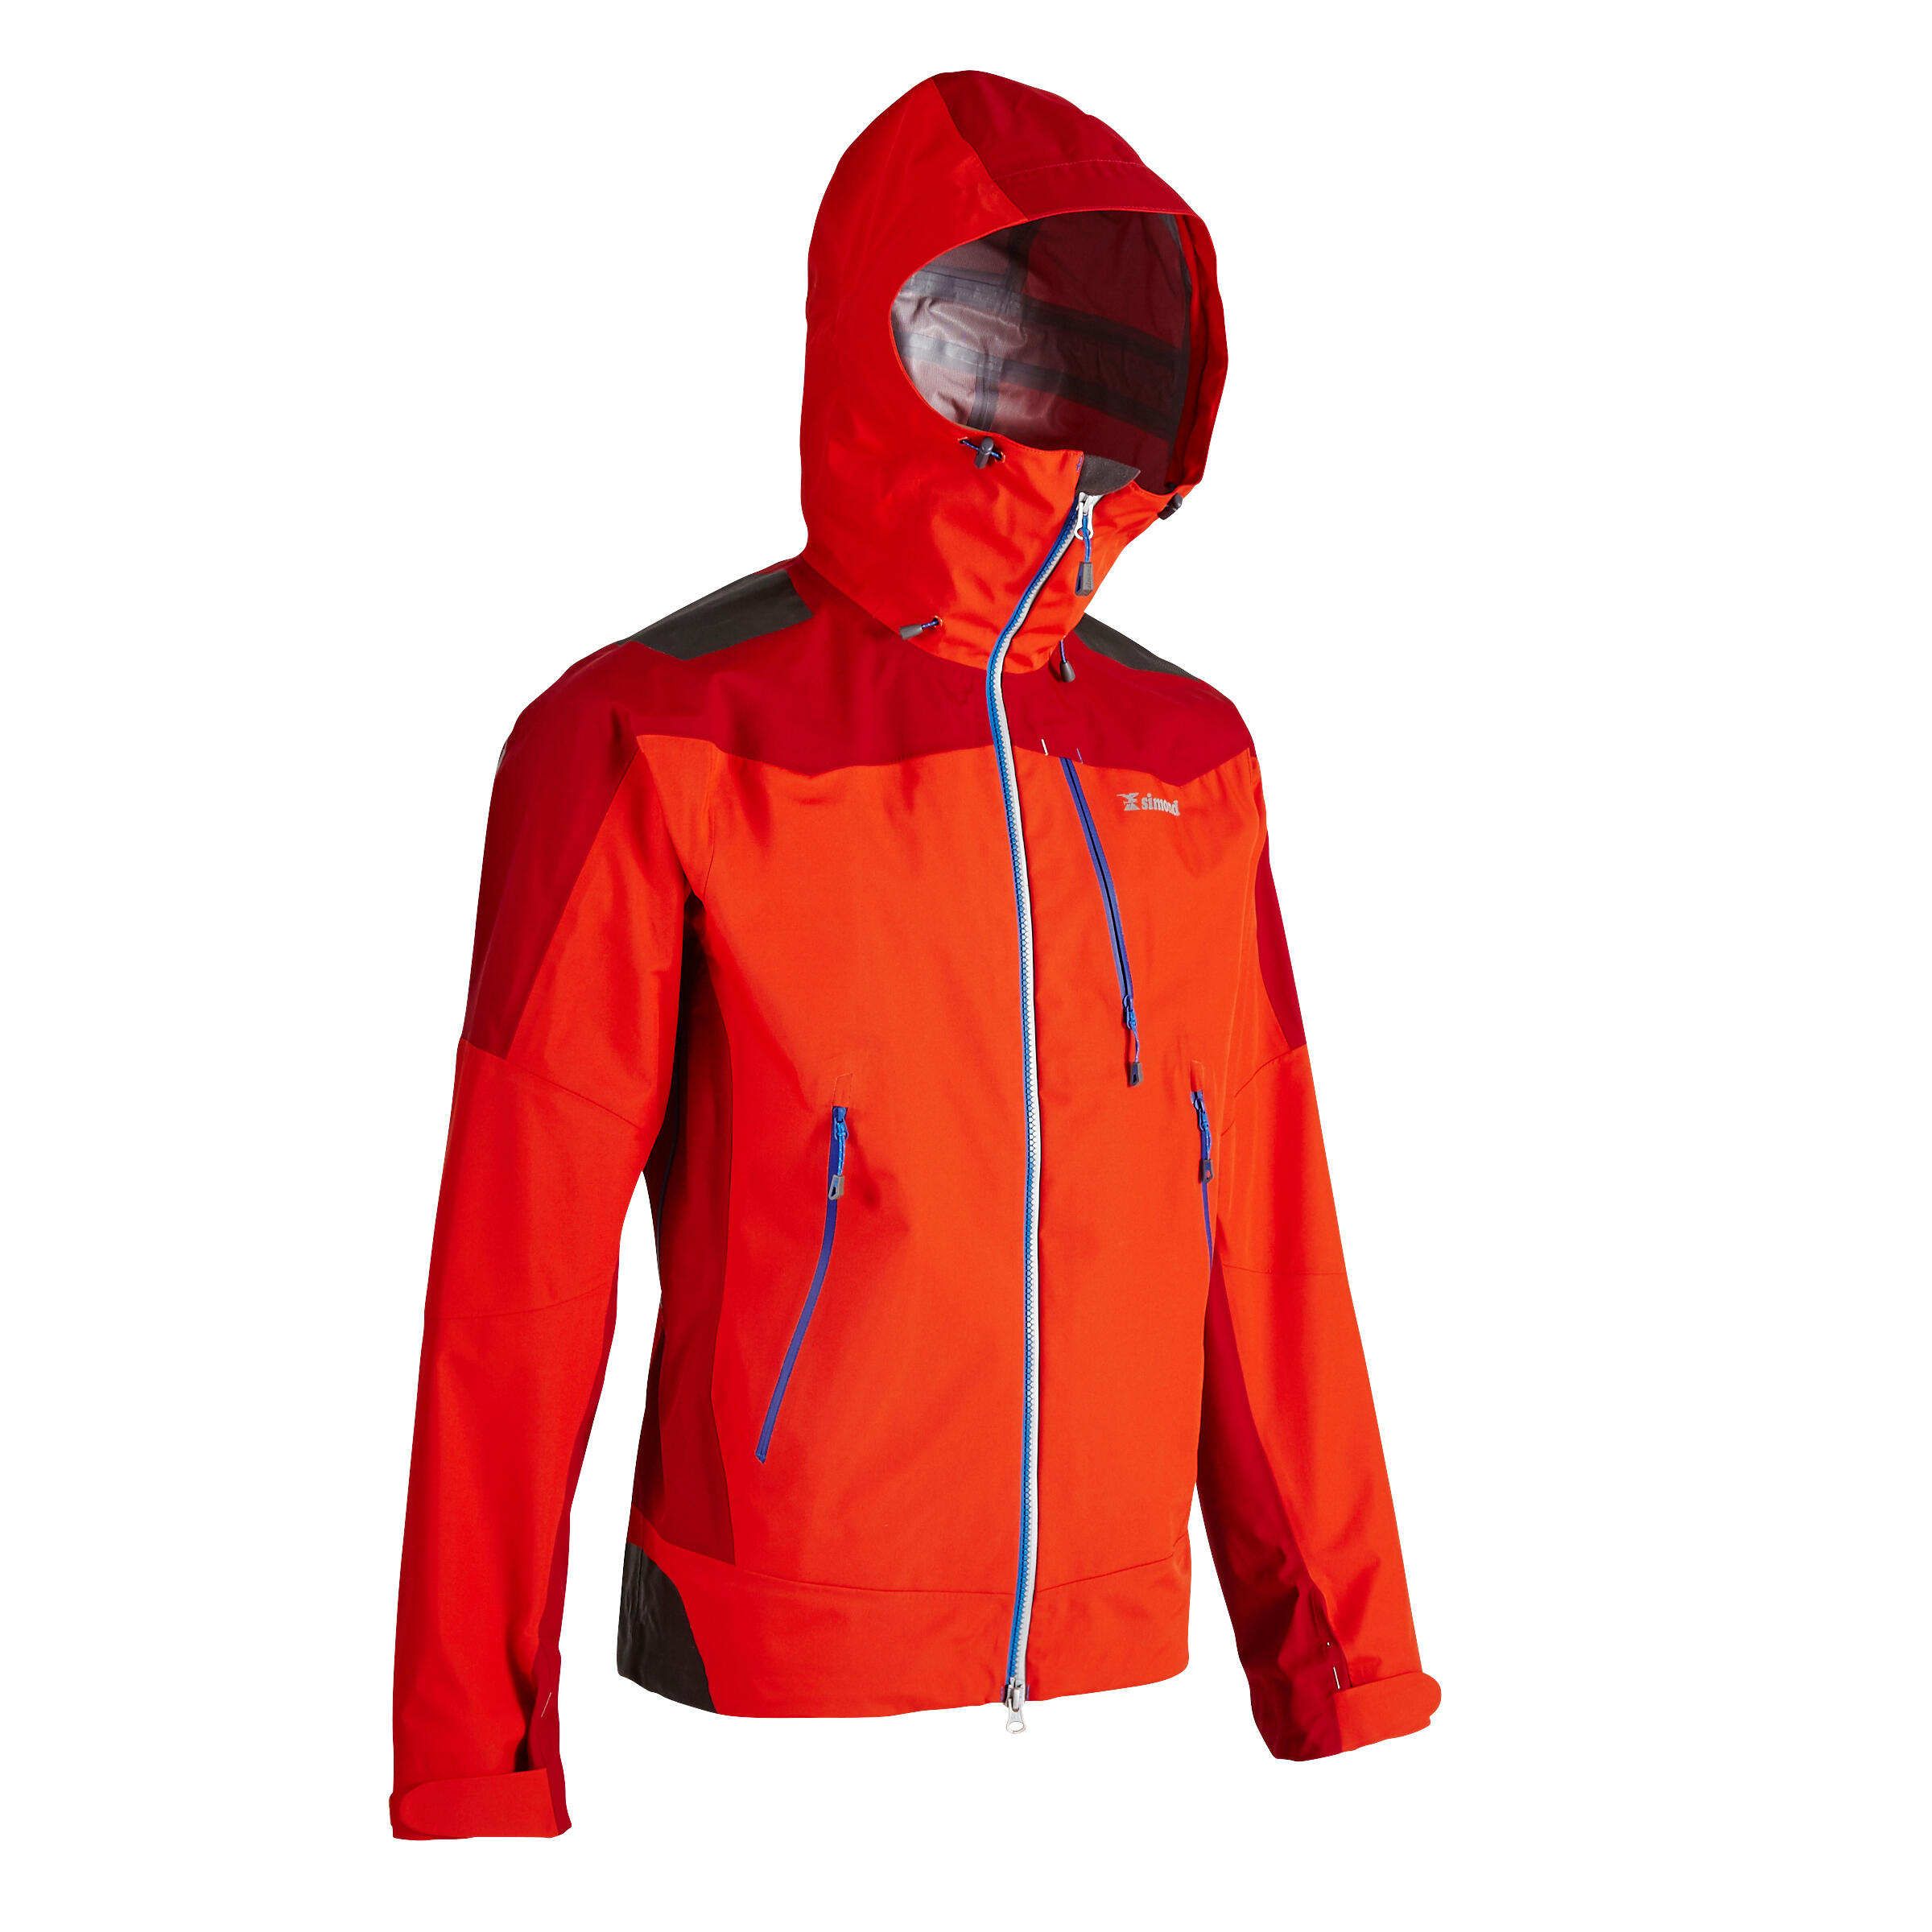 decathlon red jacket